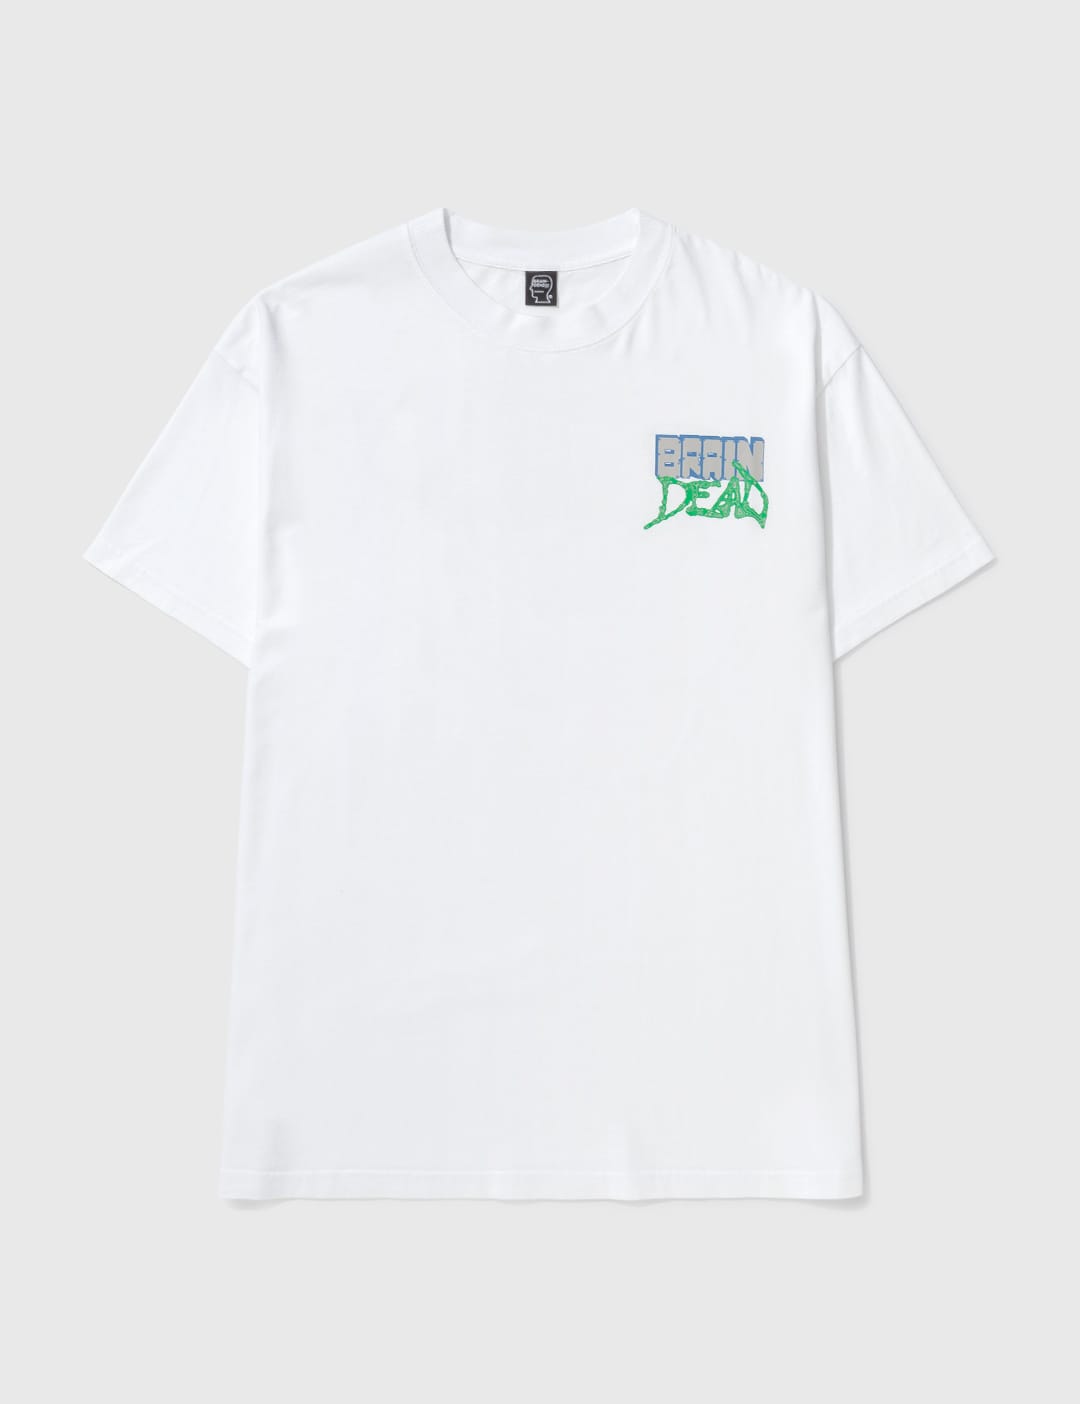 Moncler Genius - 1952 x UNDEFEATED Logo T-Shirt | HBX - Globally 